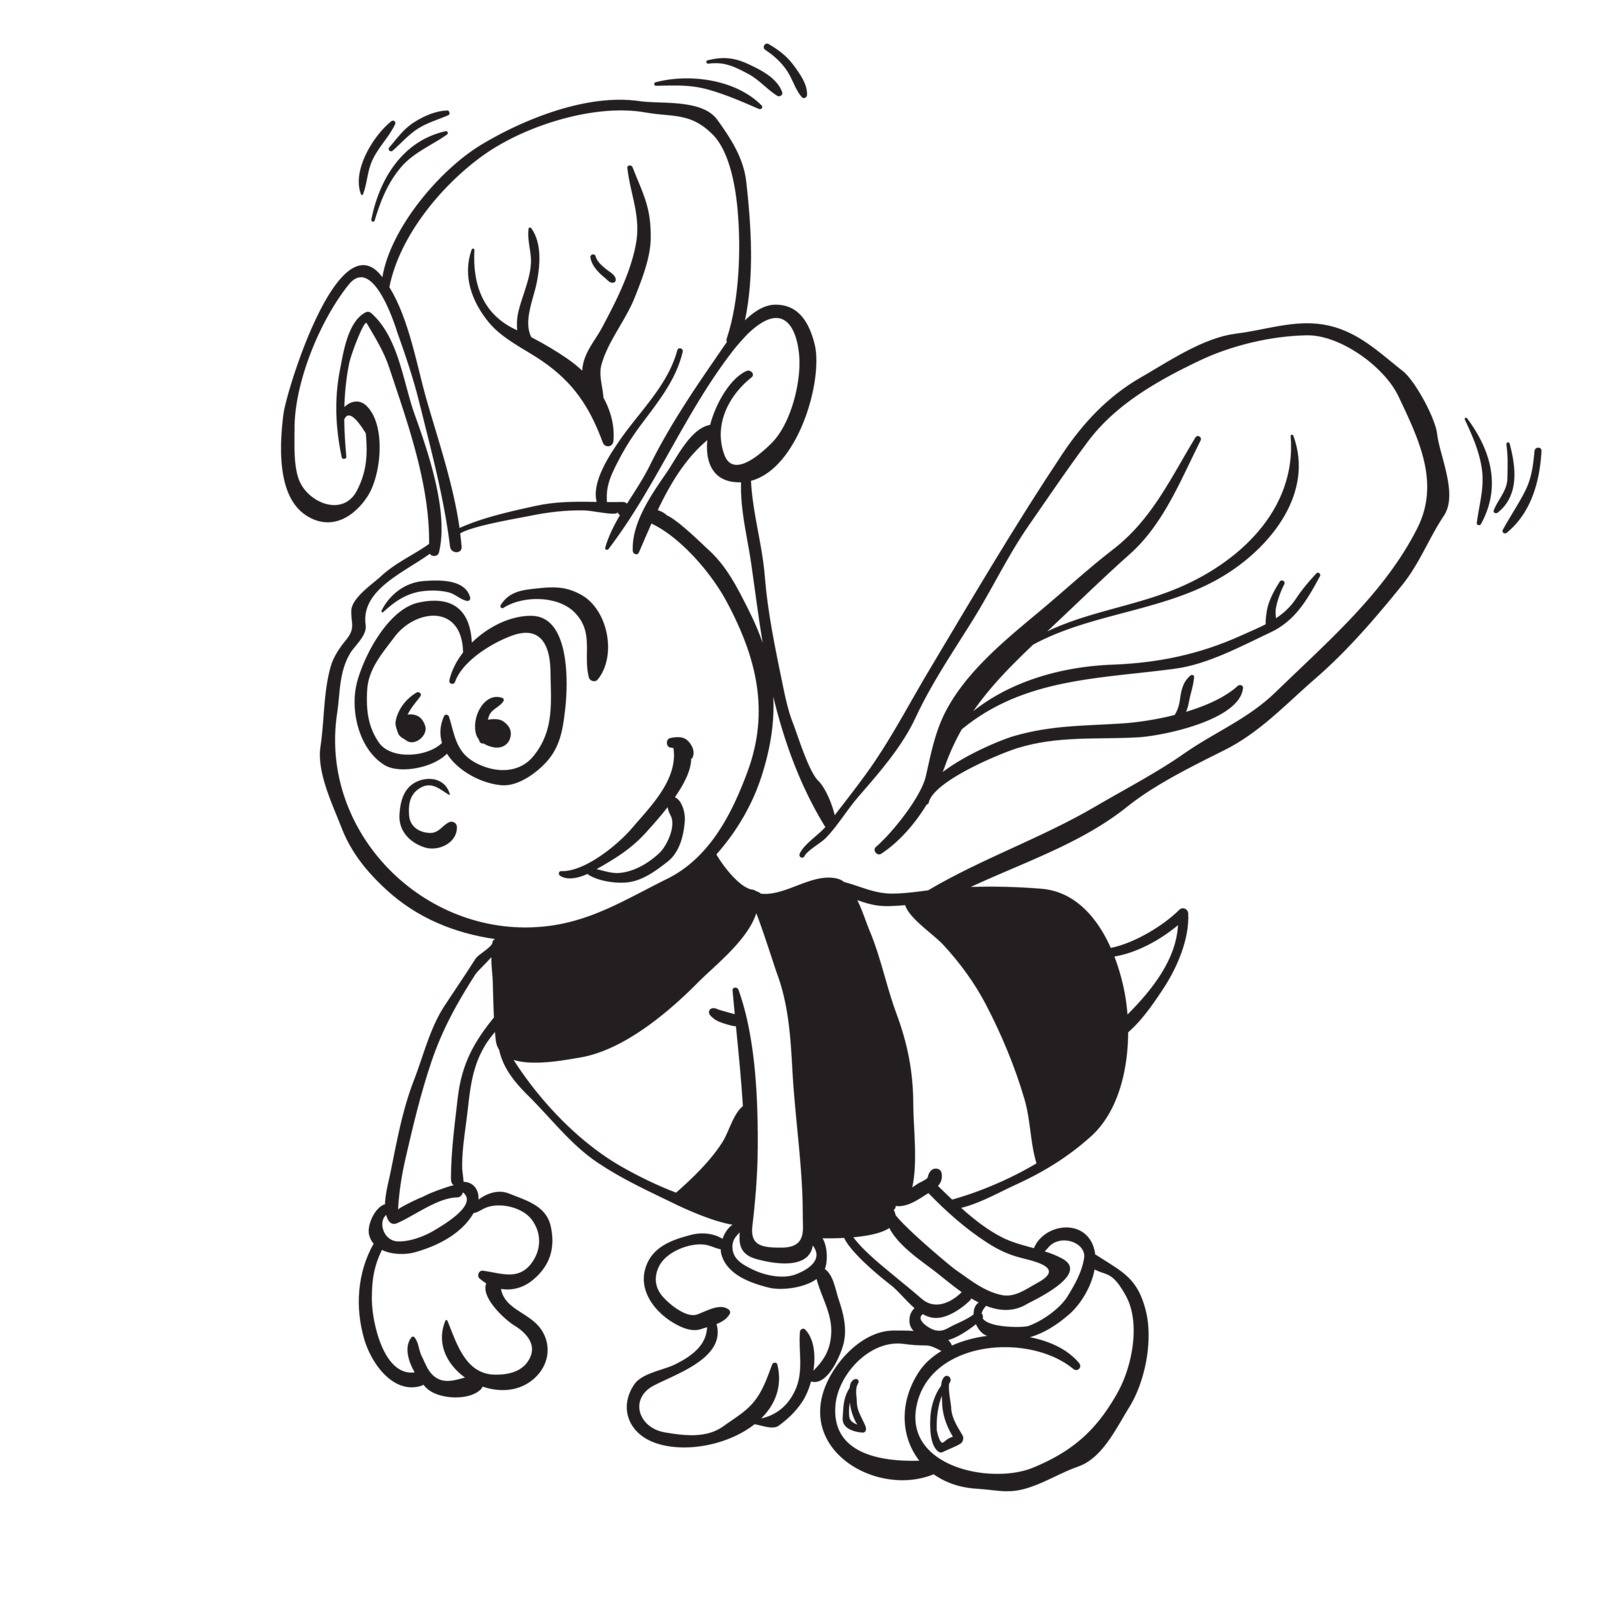 simple black and white bee cartoon illustration